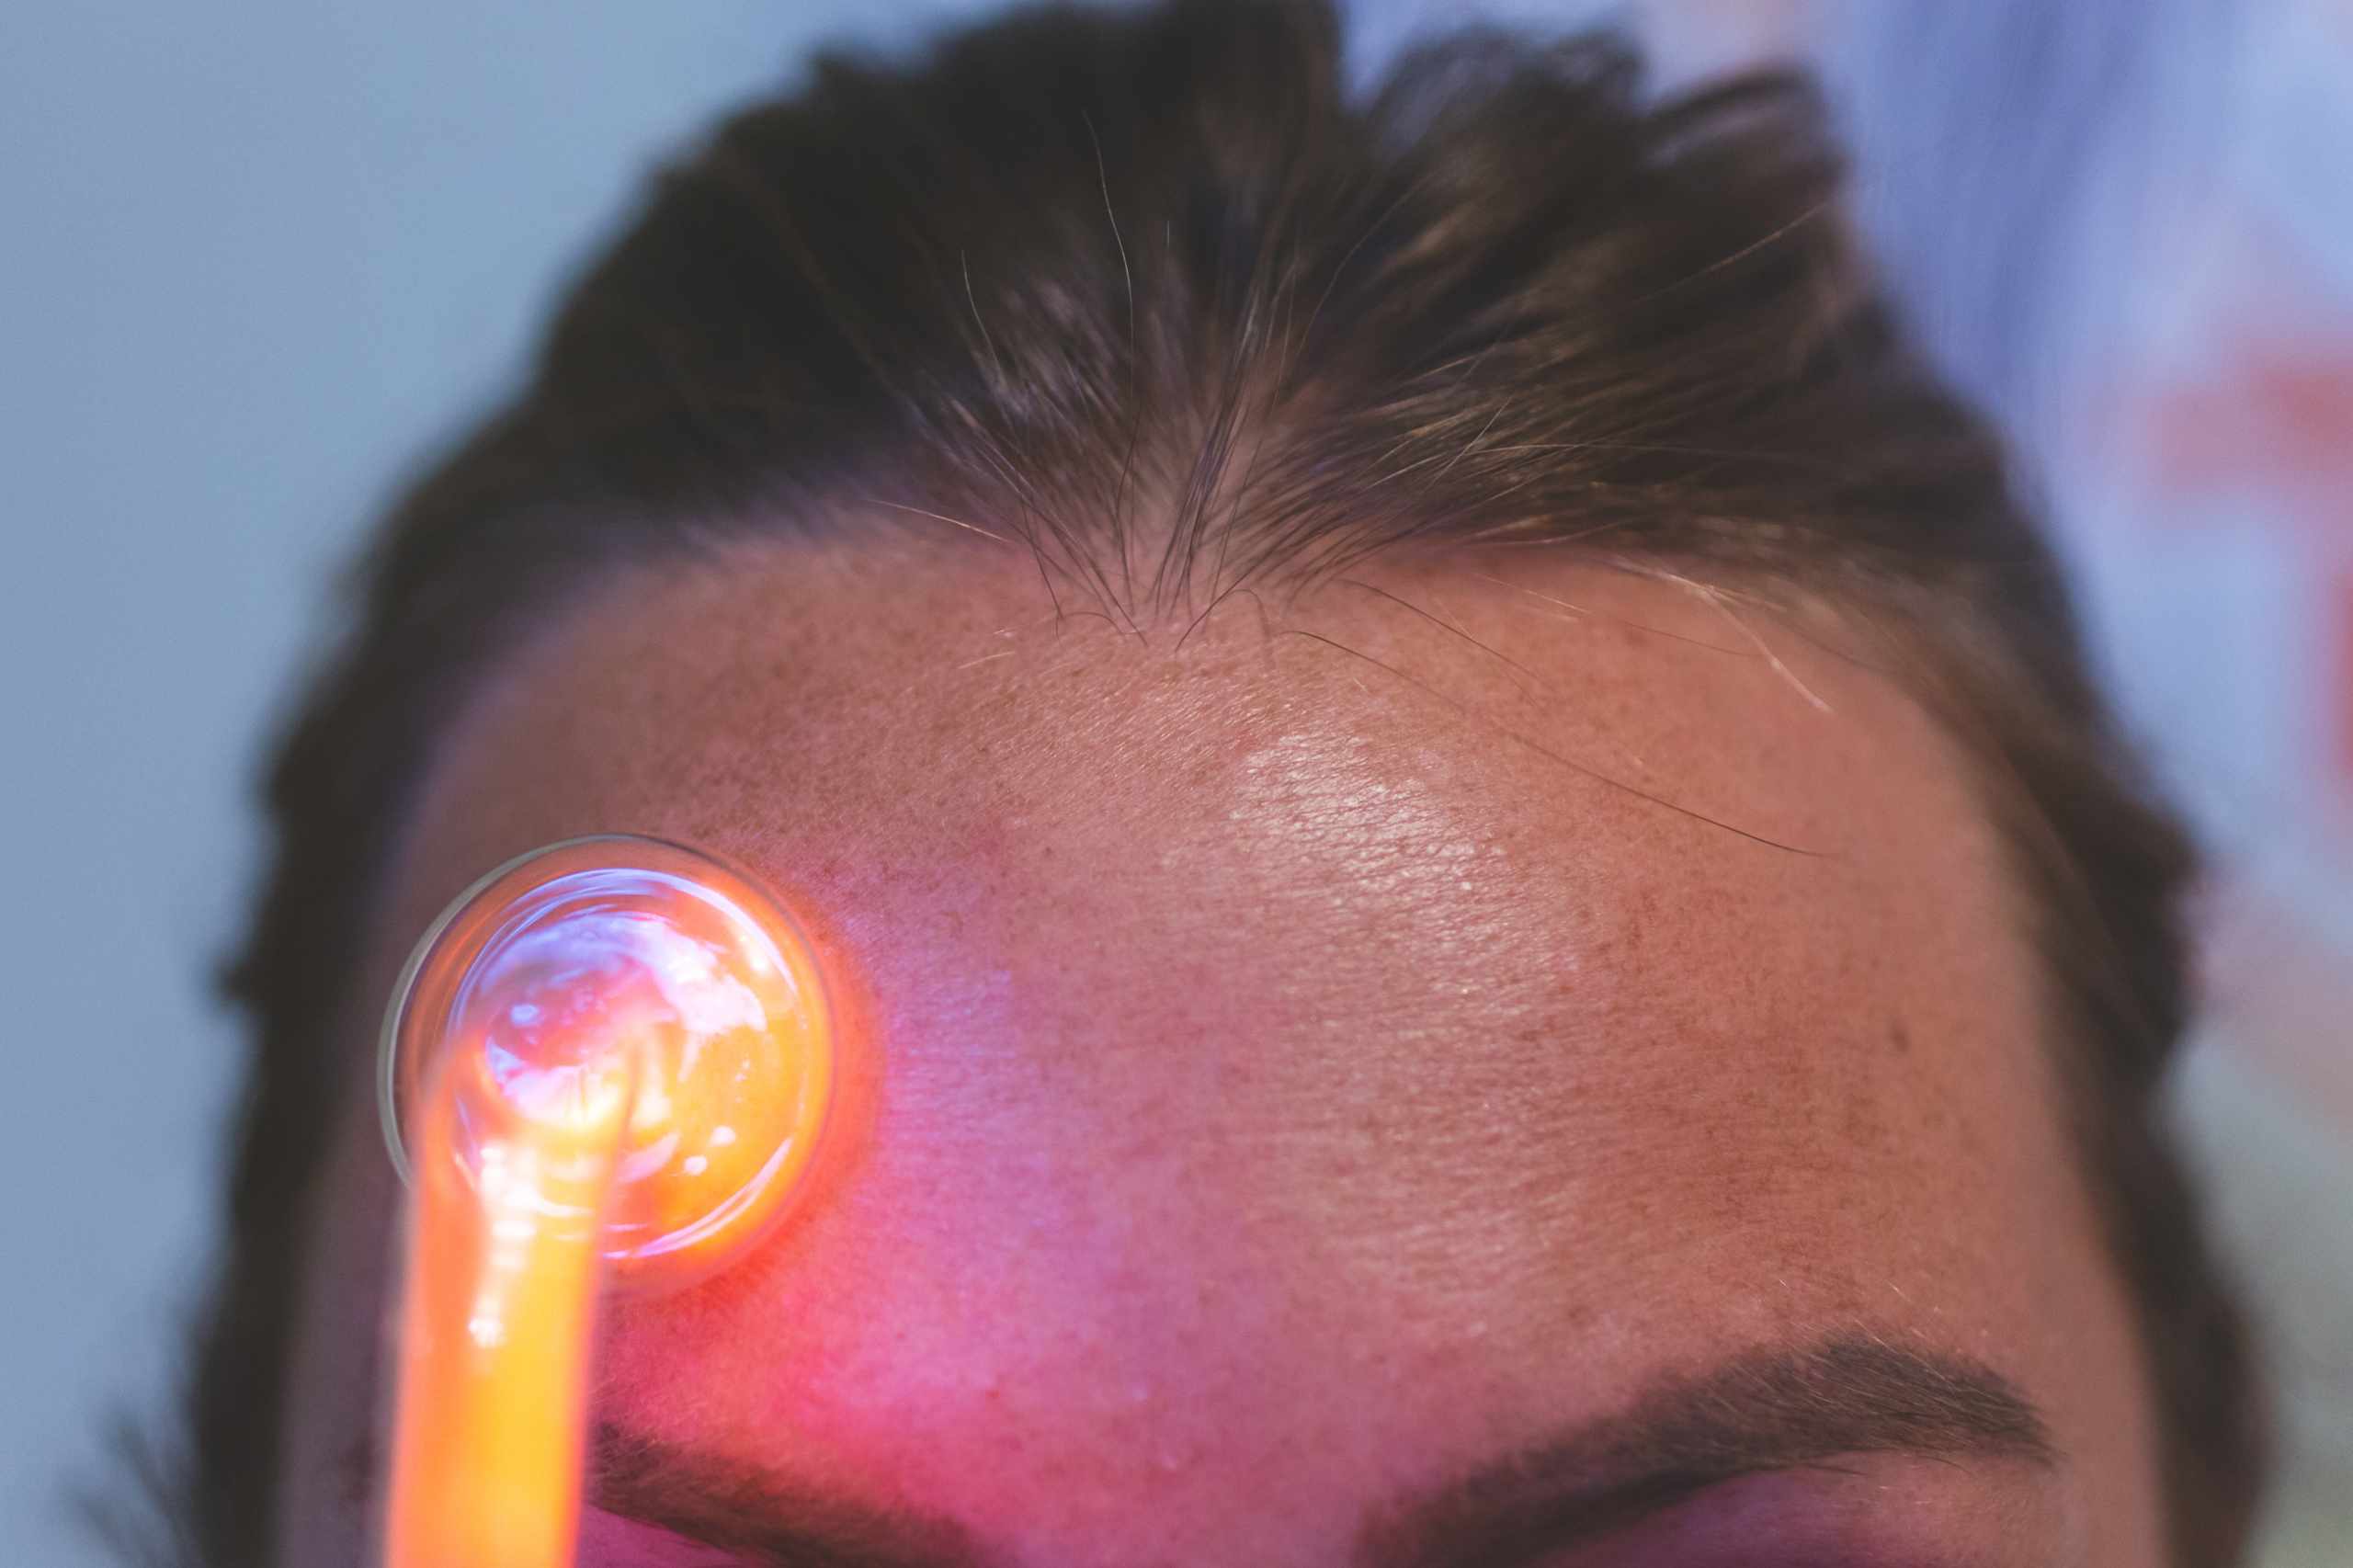 Should You DIY Acne Treatments? A Short Guide